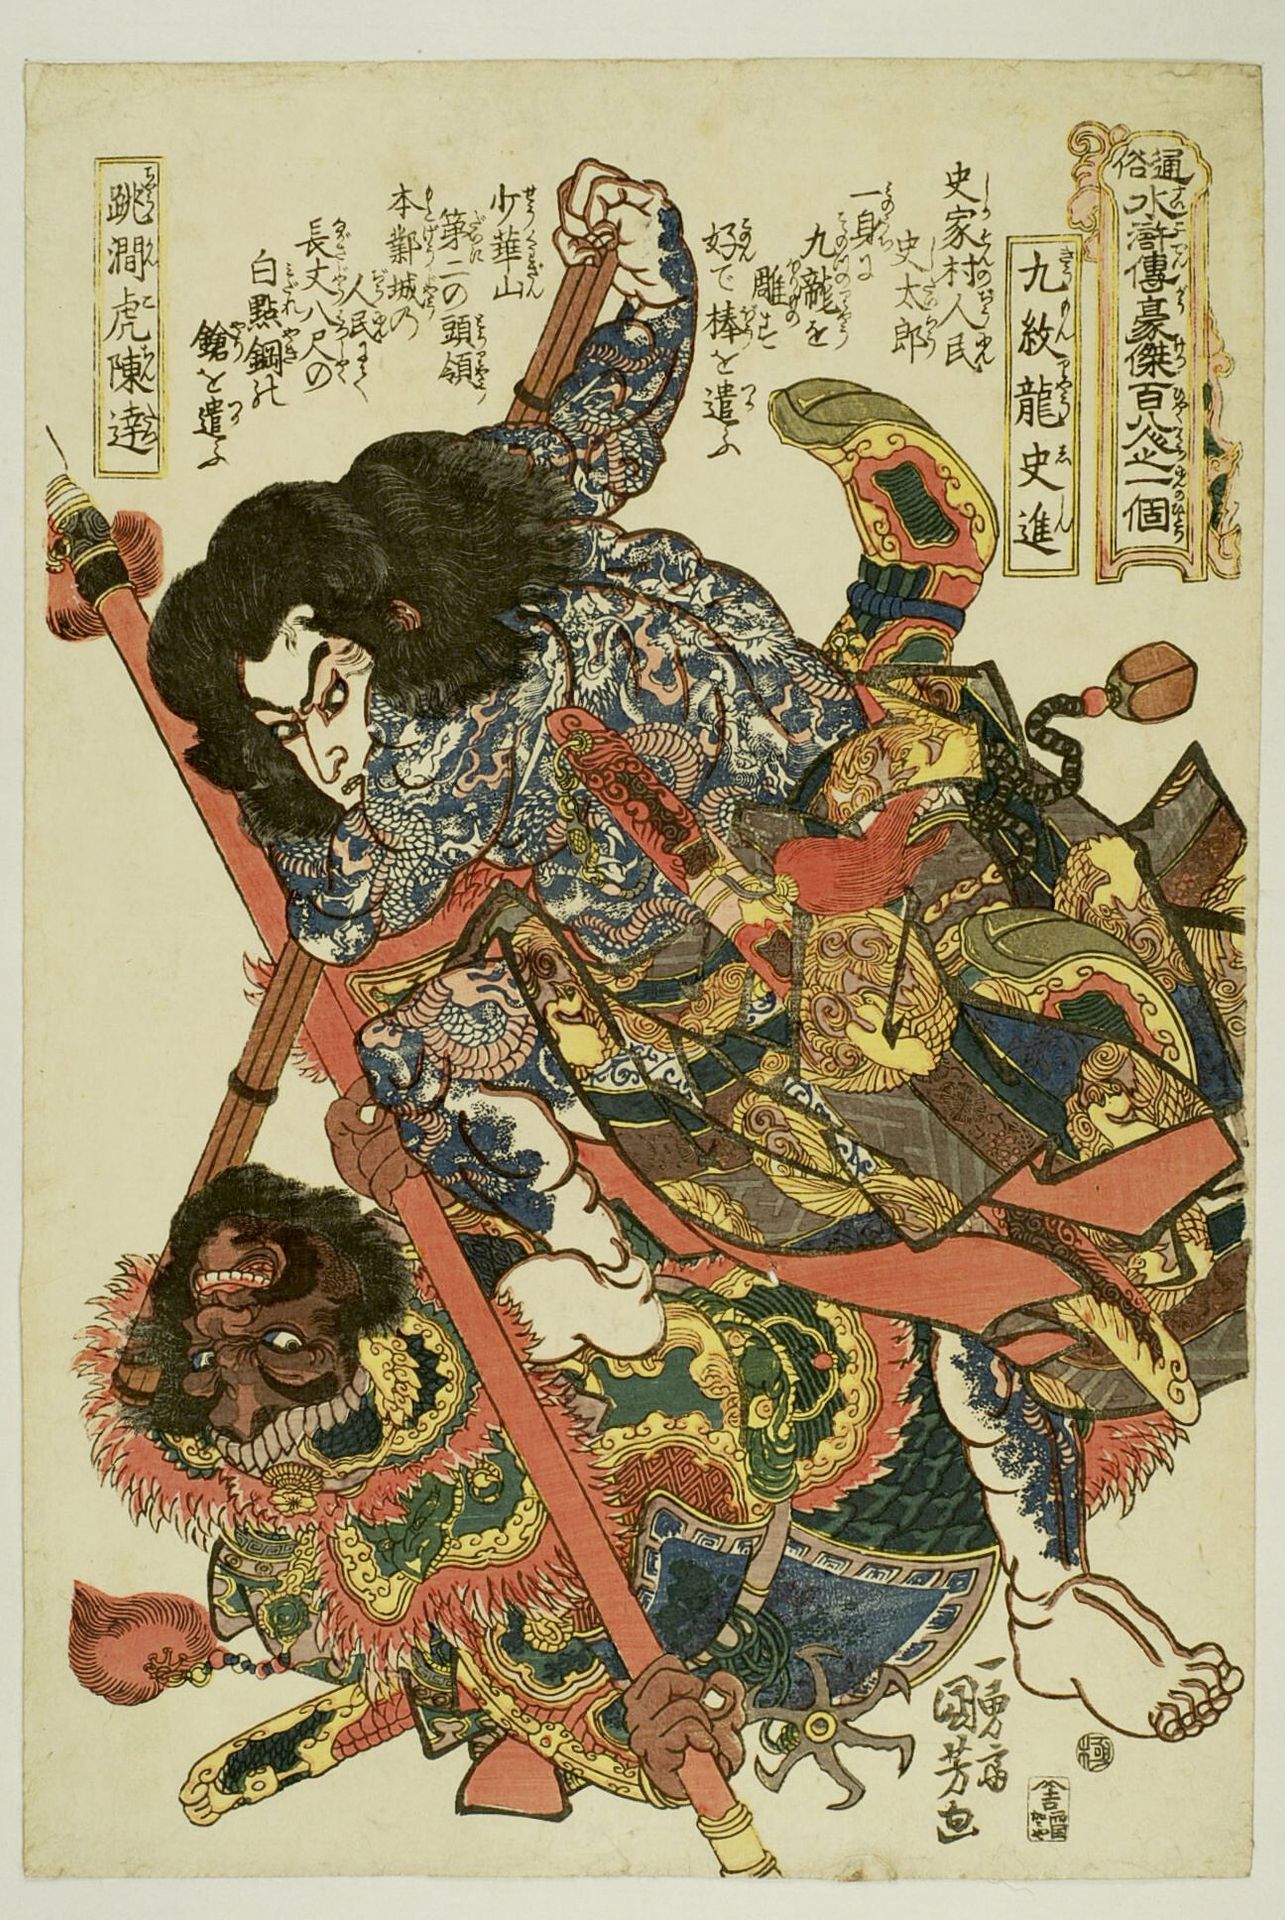 Null 宇都宫邦彦 (1797-1861)
水浒传》系列中的 "大班"（Oban tate-e），《水浒传》中的108位英雄，板块中的久文龙师弟和长拳师弟在战&hellip;